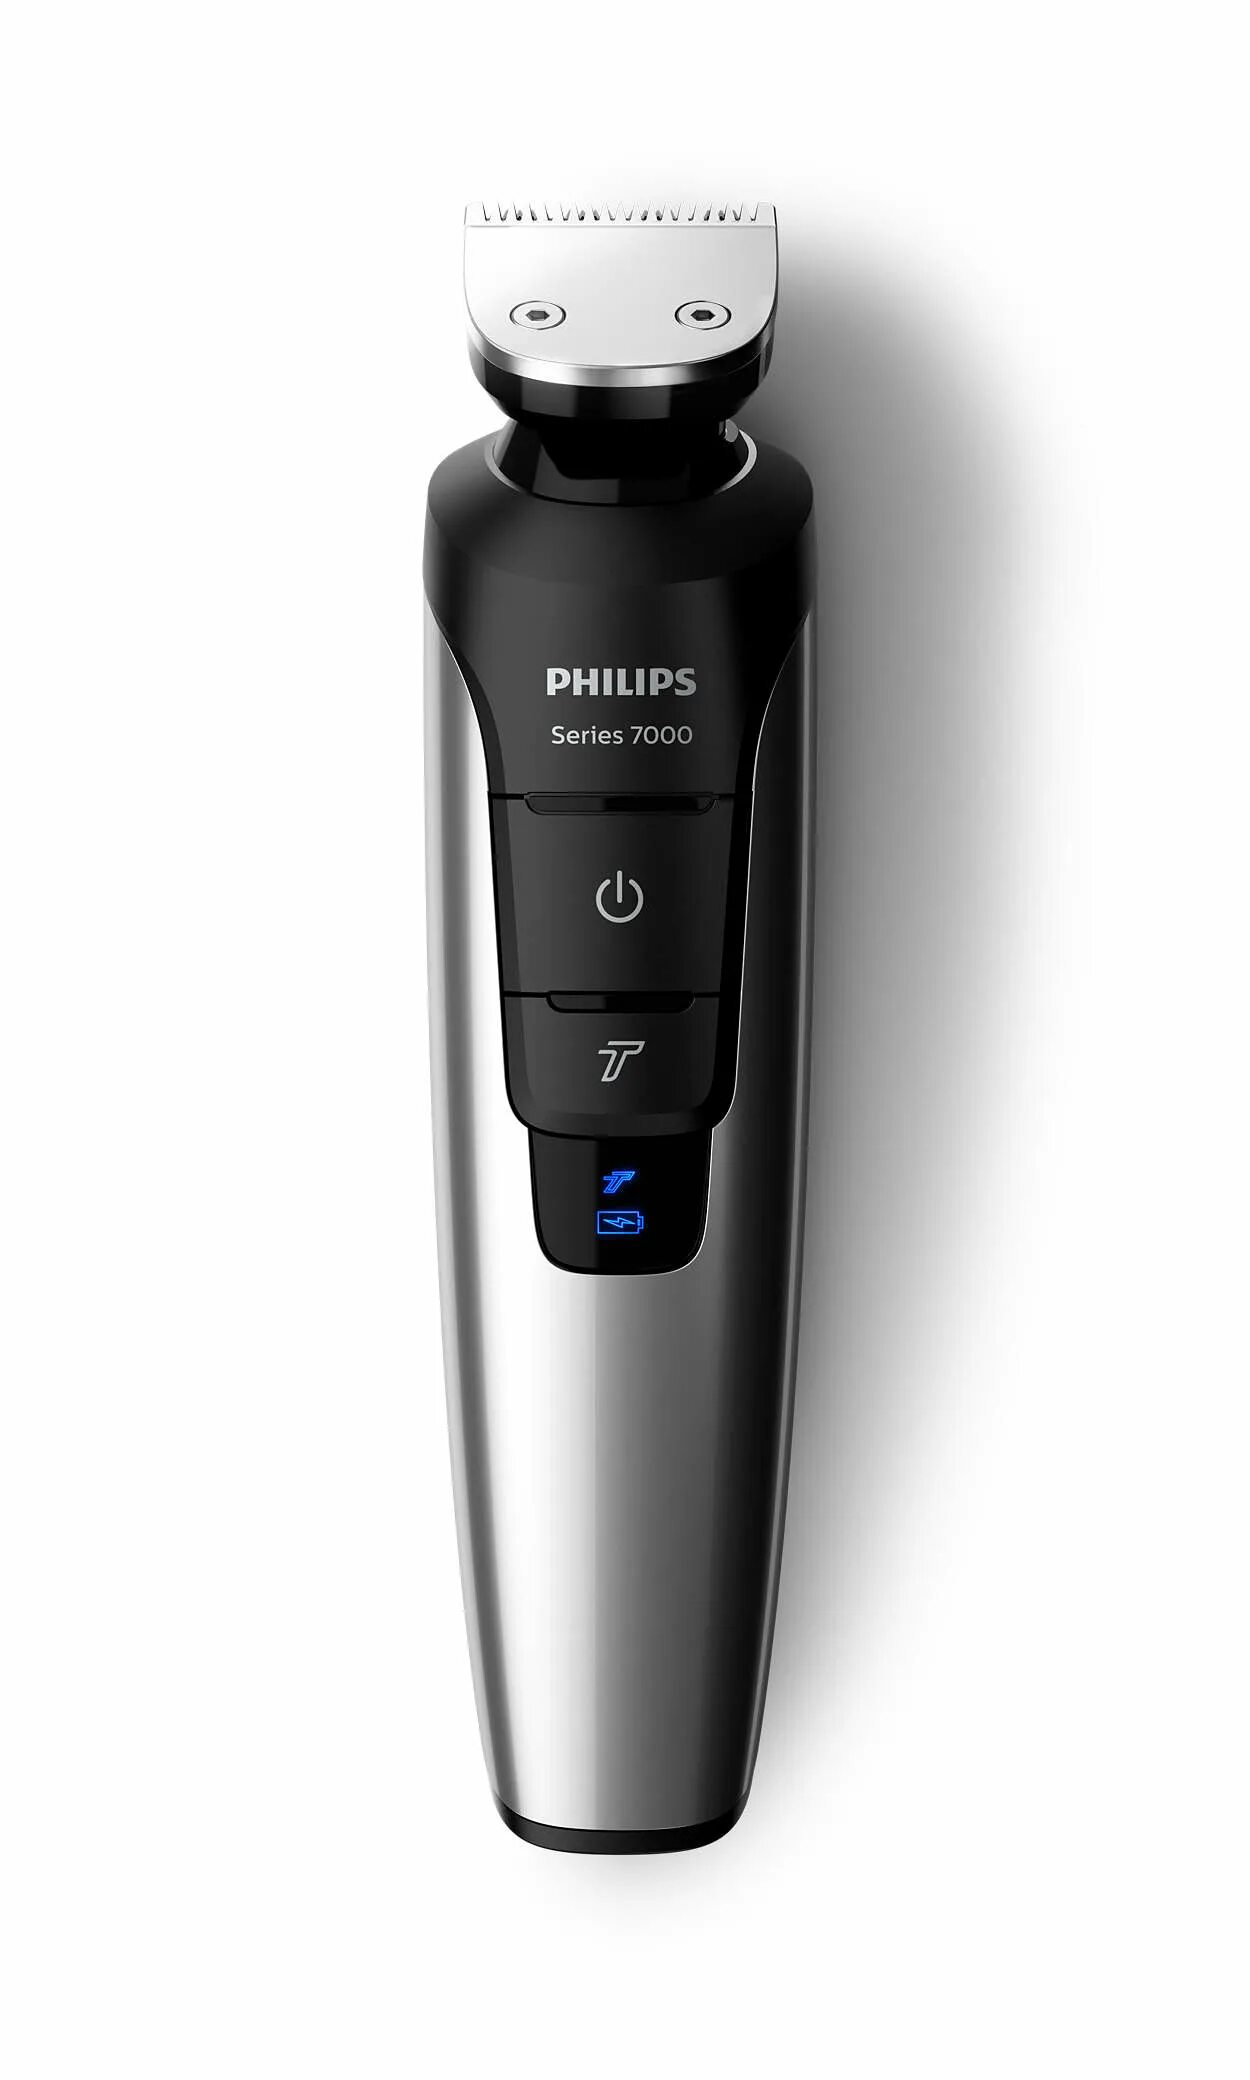 Philips 7000 series. Philips Multigroom Series 7000. Philips Norelco Multigroom 7000. Philips Beard Trimmer 7000. Philips Norelco триммер.